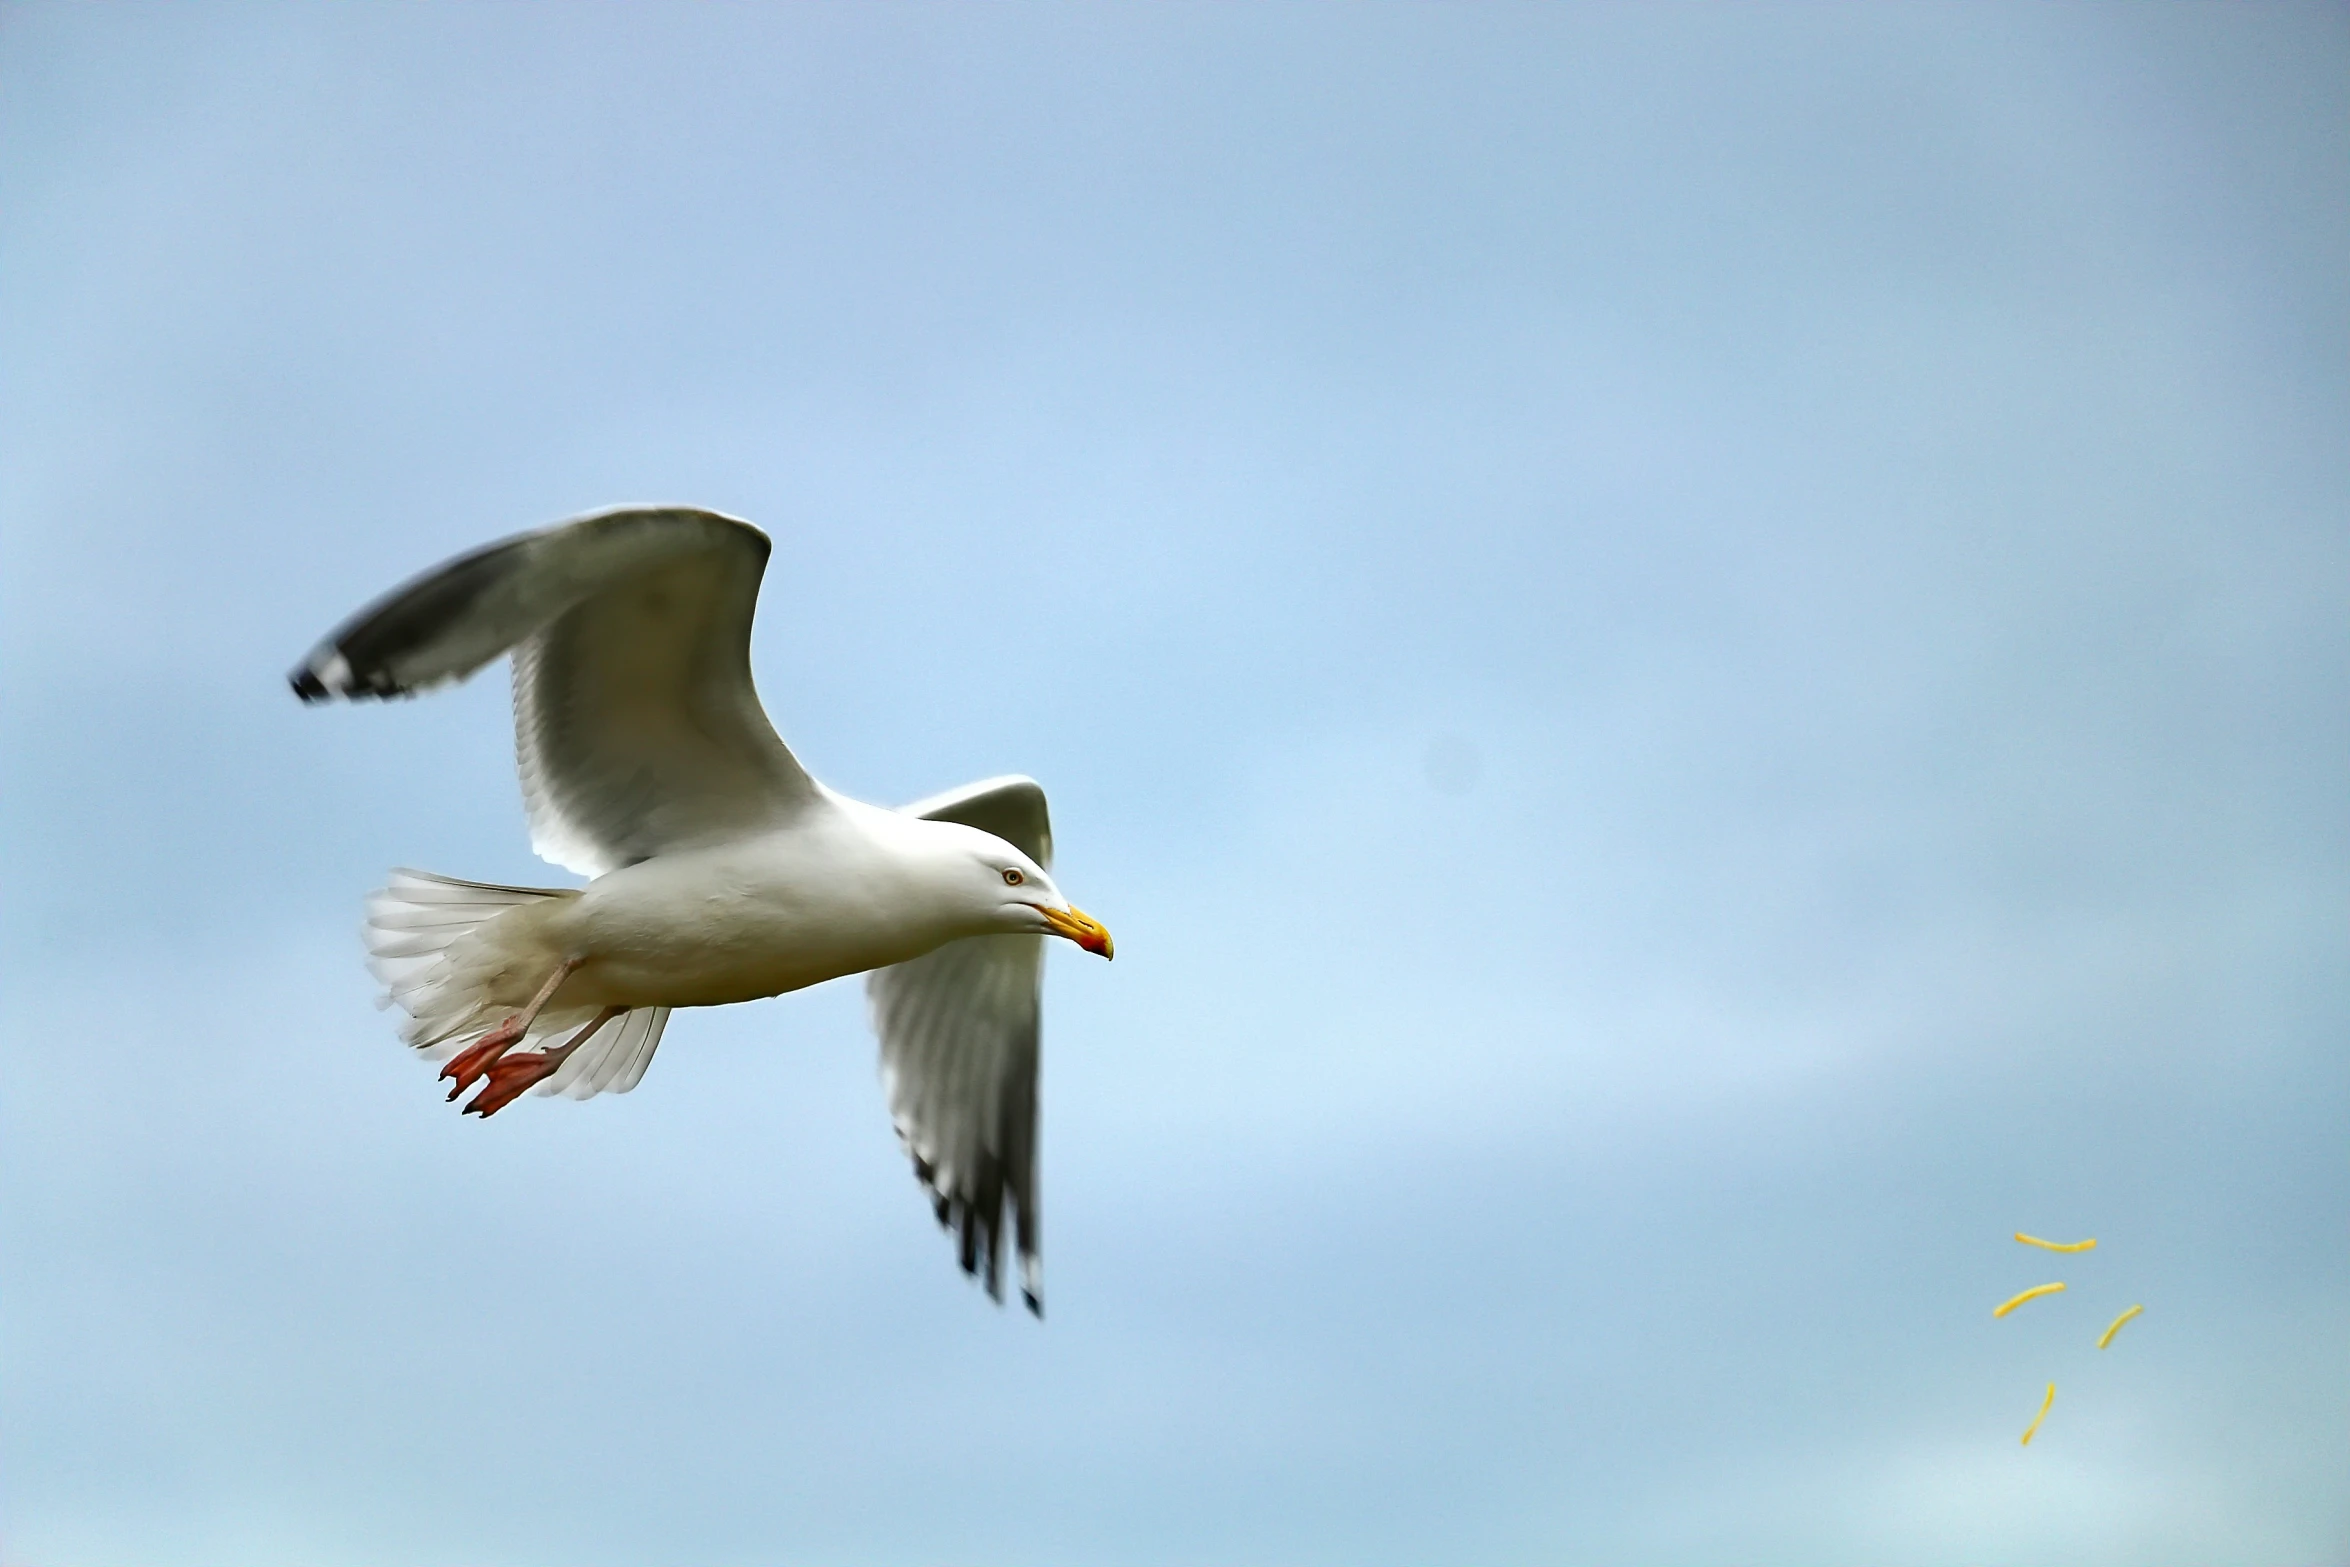 a seagull flies through the clear blue sky